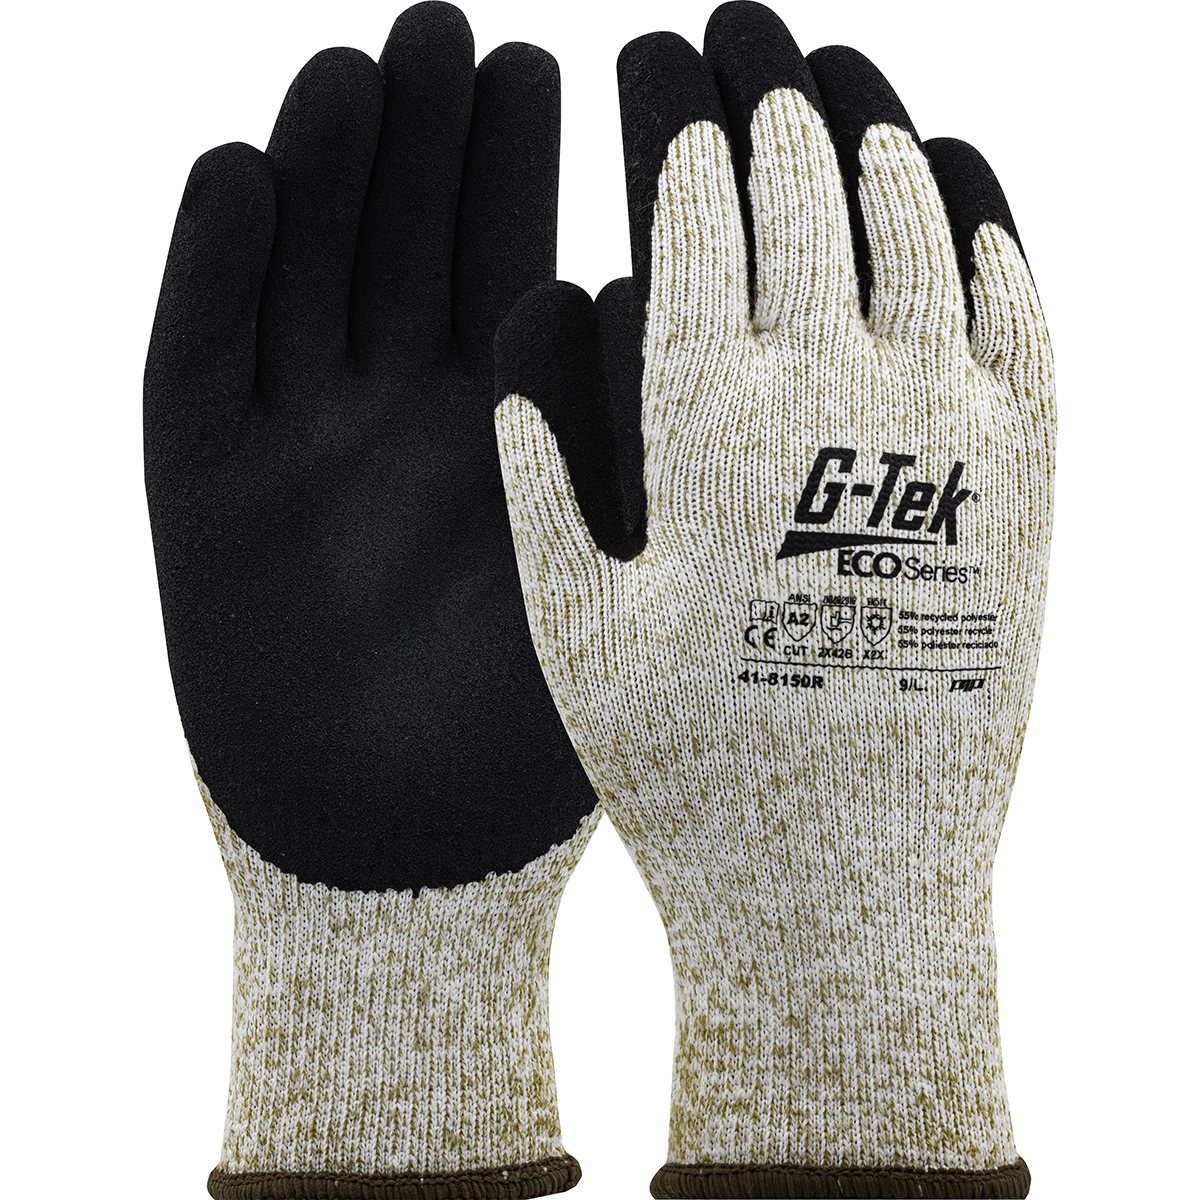 PIP®G-Tek®ECO系列™微表面胶乳涂覆无缝针织A2抗切割工作安全手套